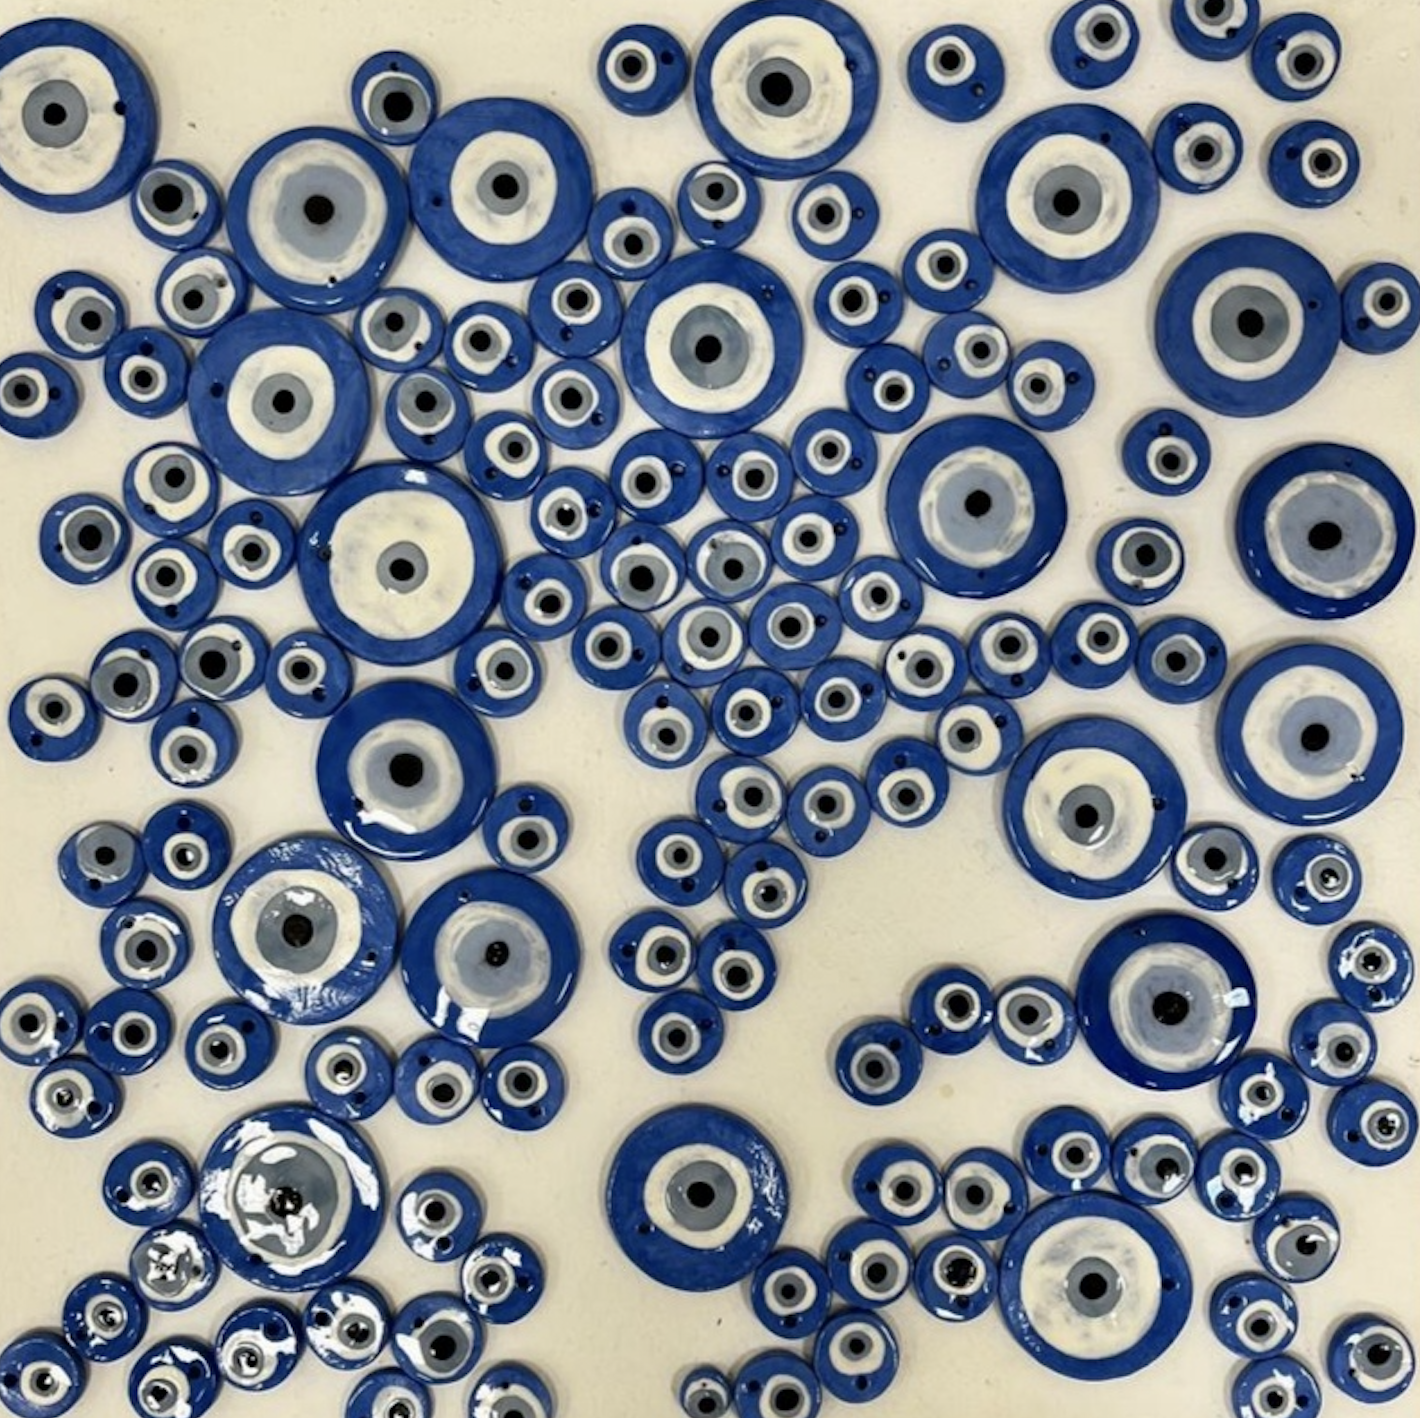 Evil eye ceramic sculptures in various sizes